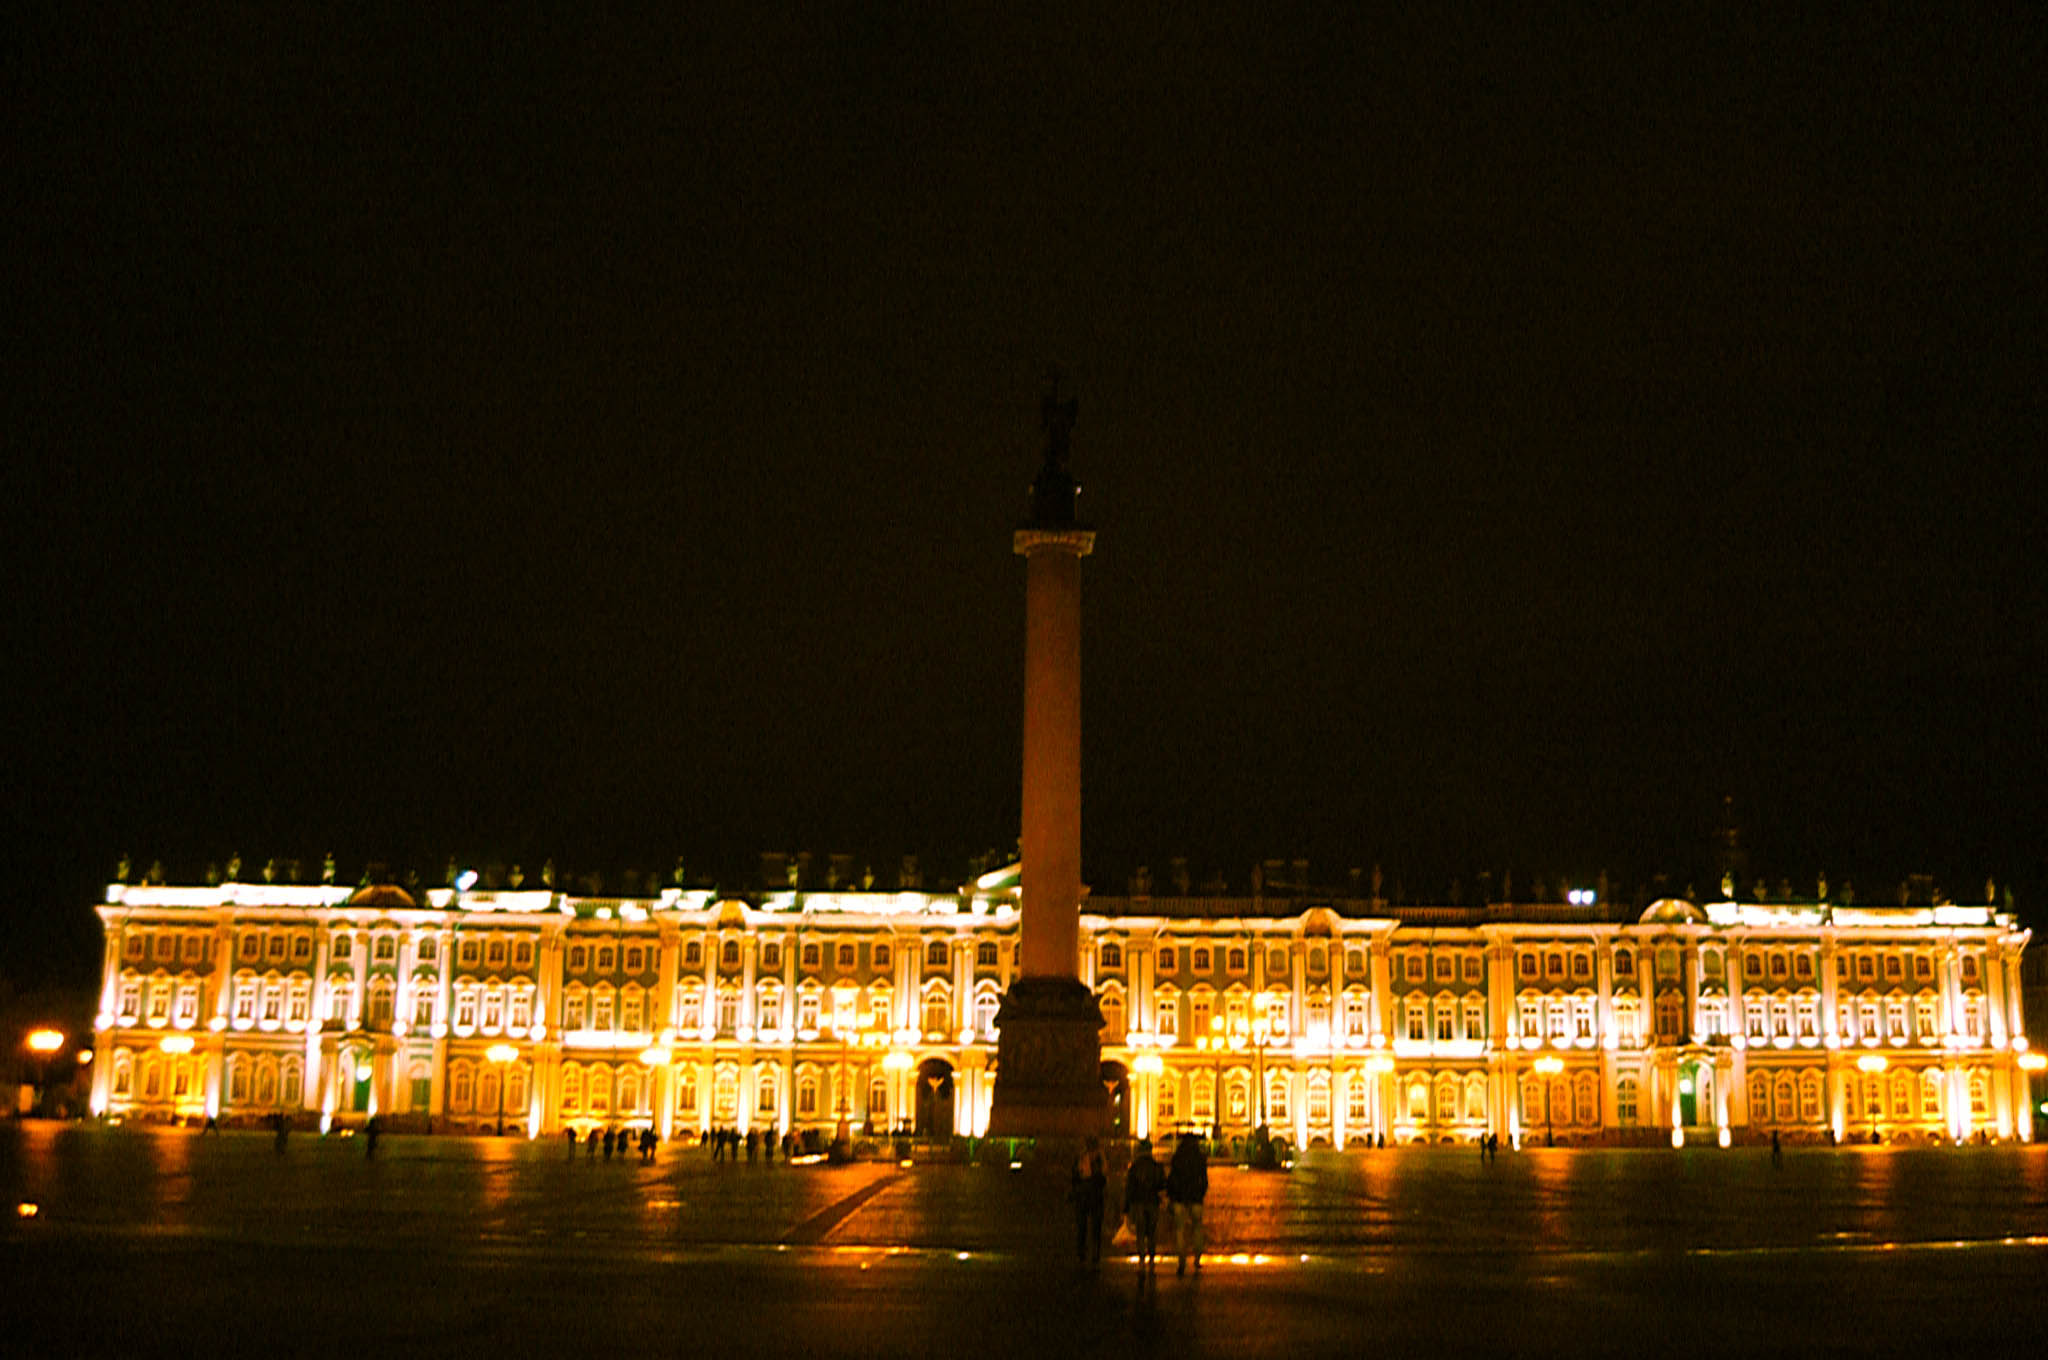 The Hermitage (Winter Palace) /Saint-Petersburg/ [Alexander Shemetev]